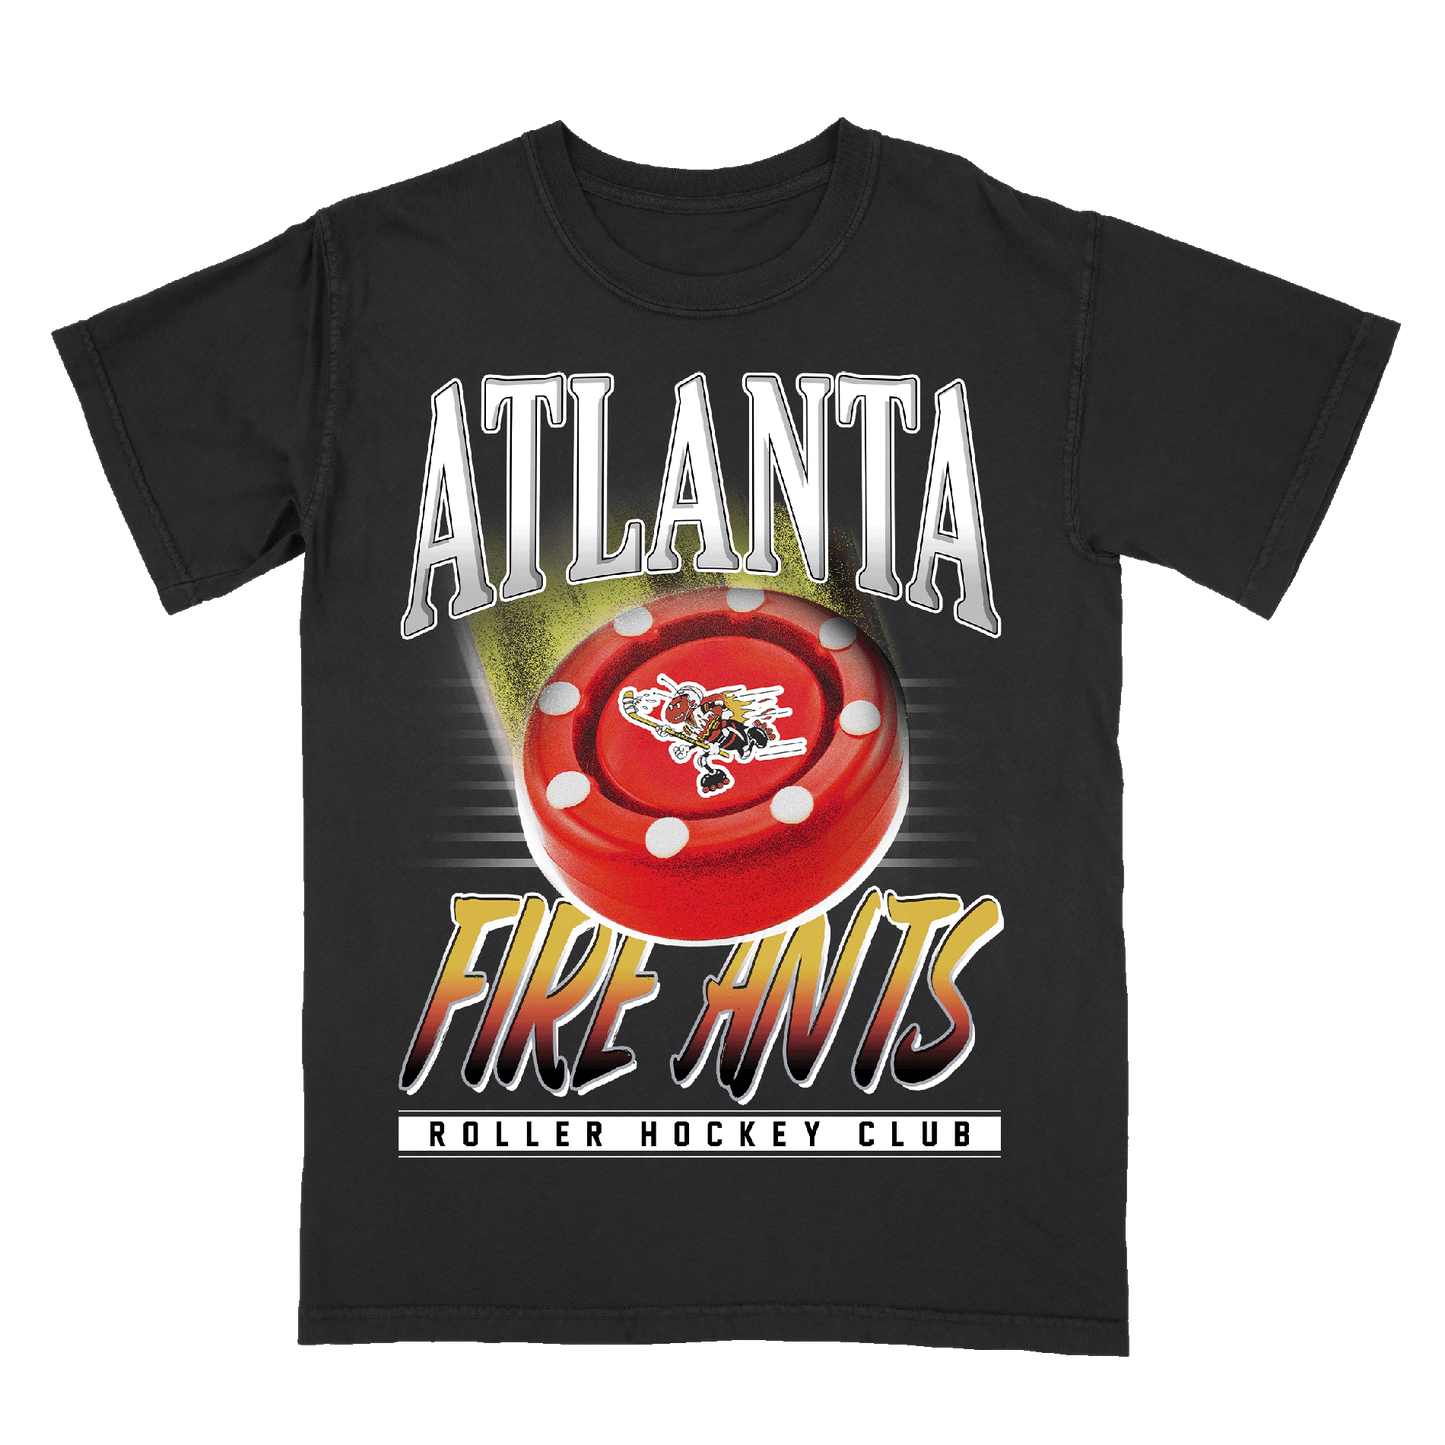 Atlanta Fire Ants!